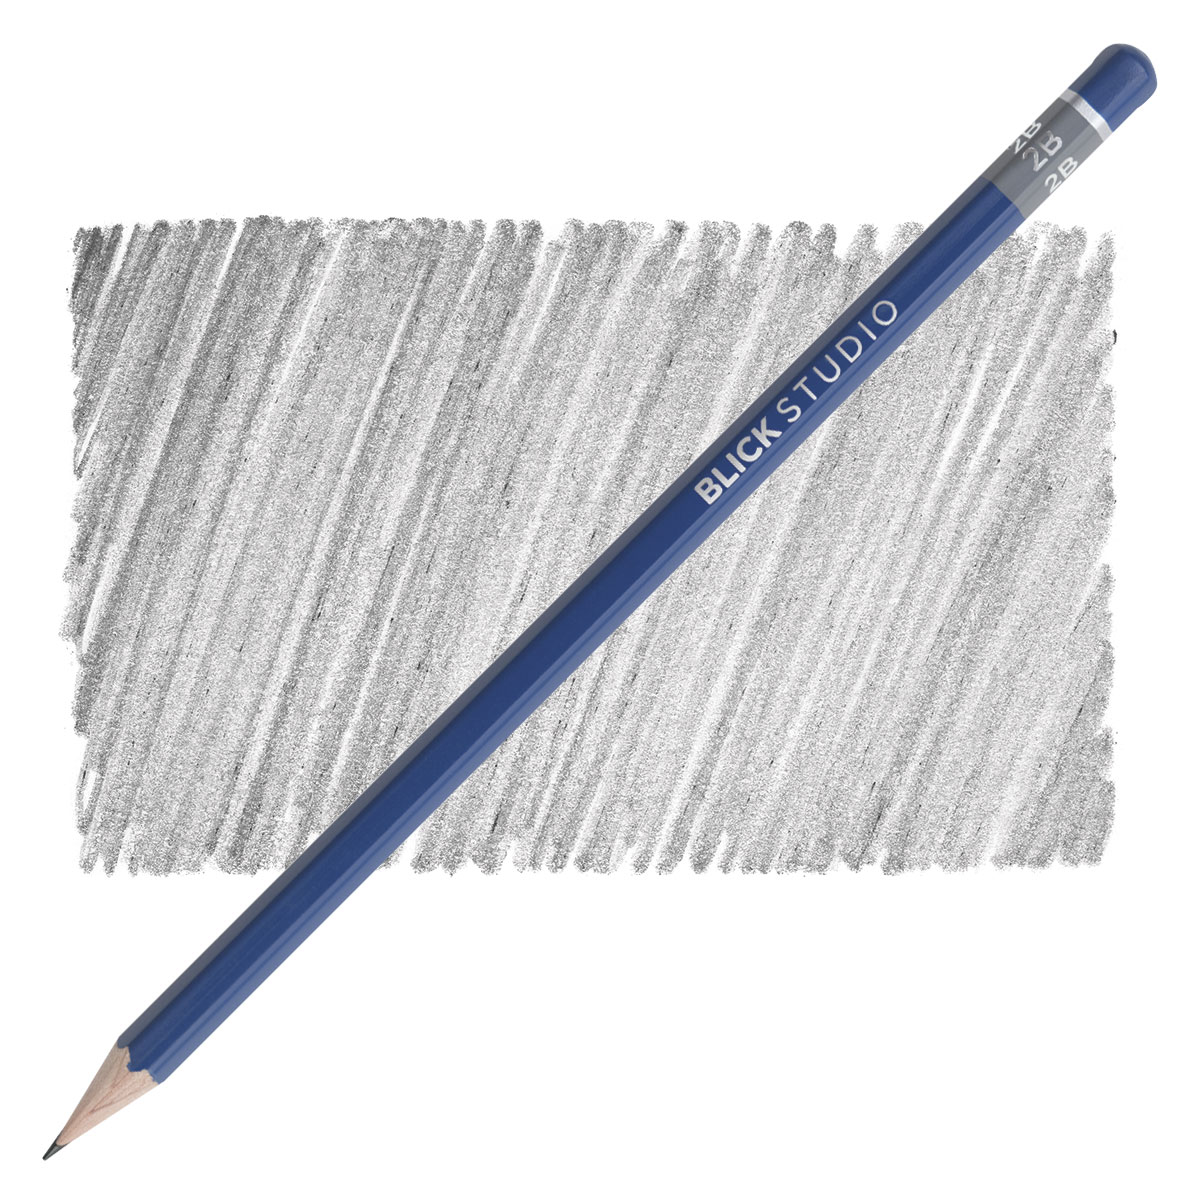 Apsara Drawing Pencils, 2B - Pack of 20 Pencils Buy Online